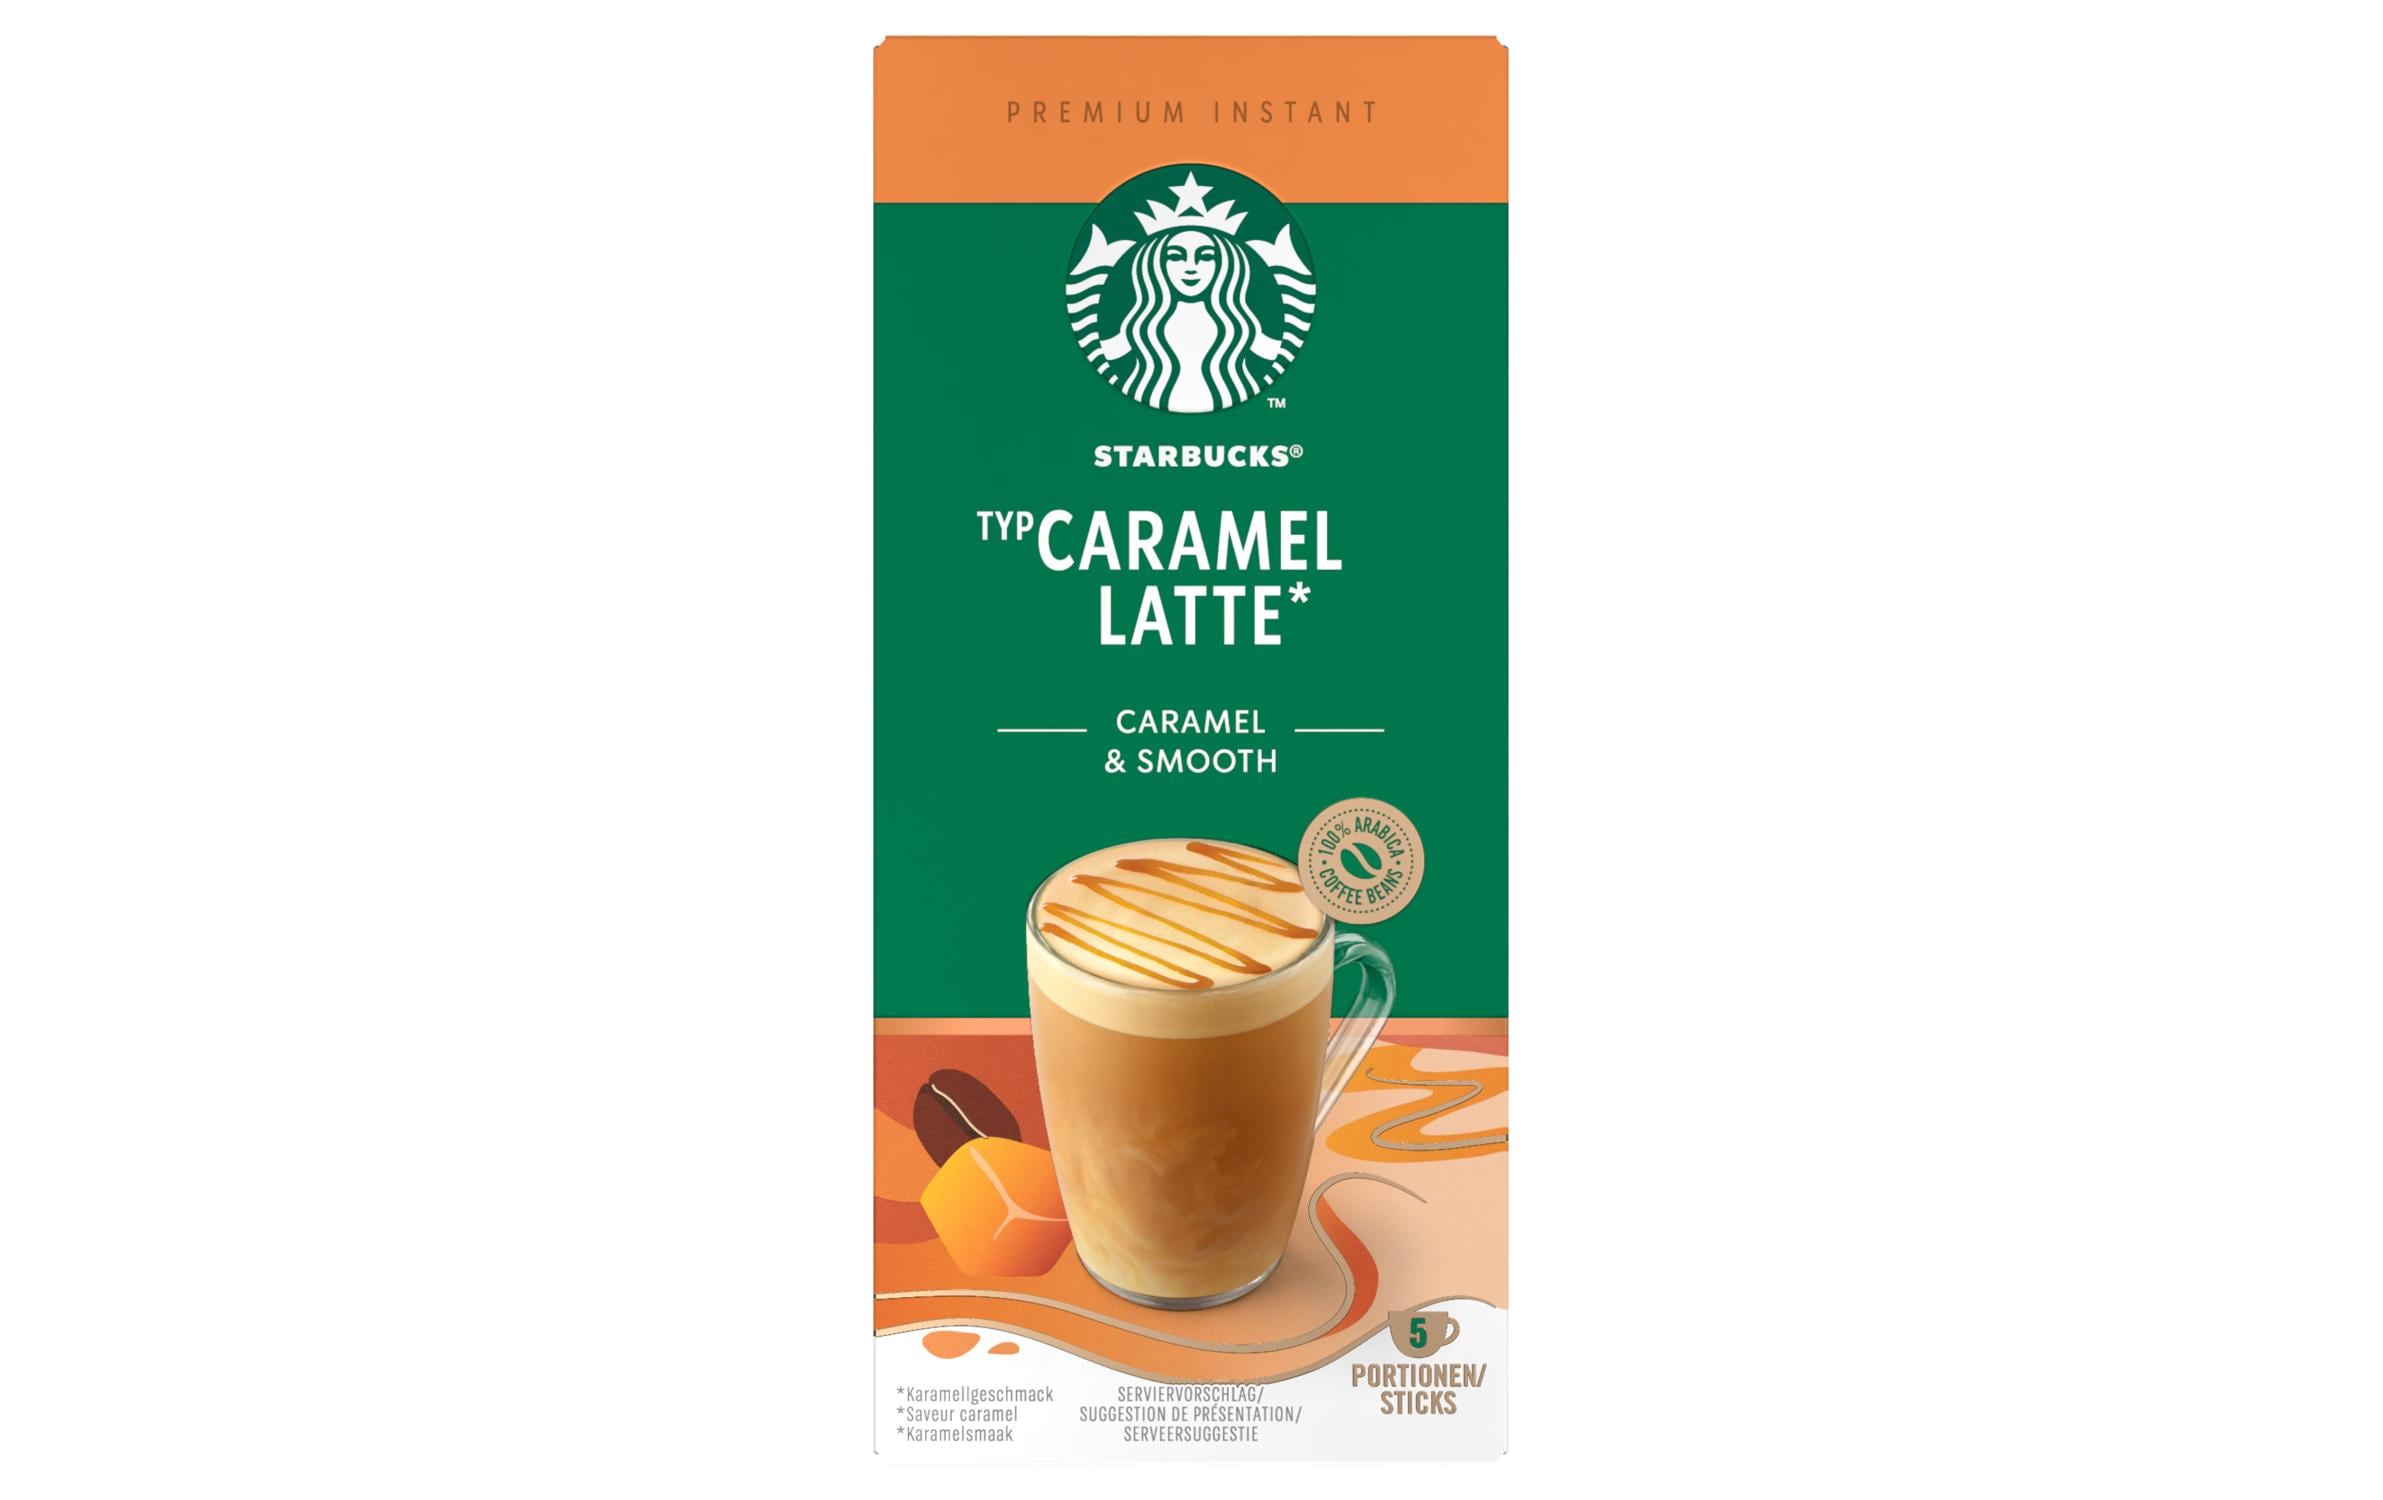 Starbucks Instant Kaffee Caramel Latte 5 Stück